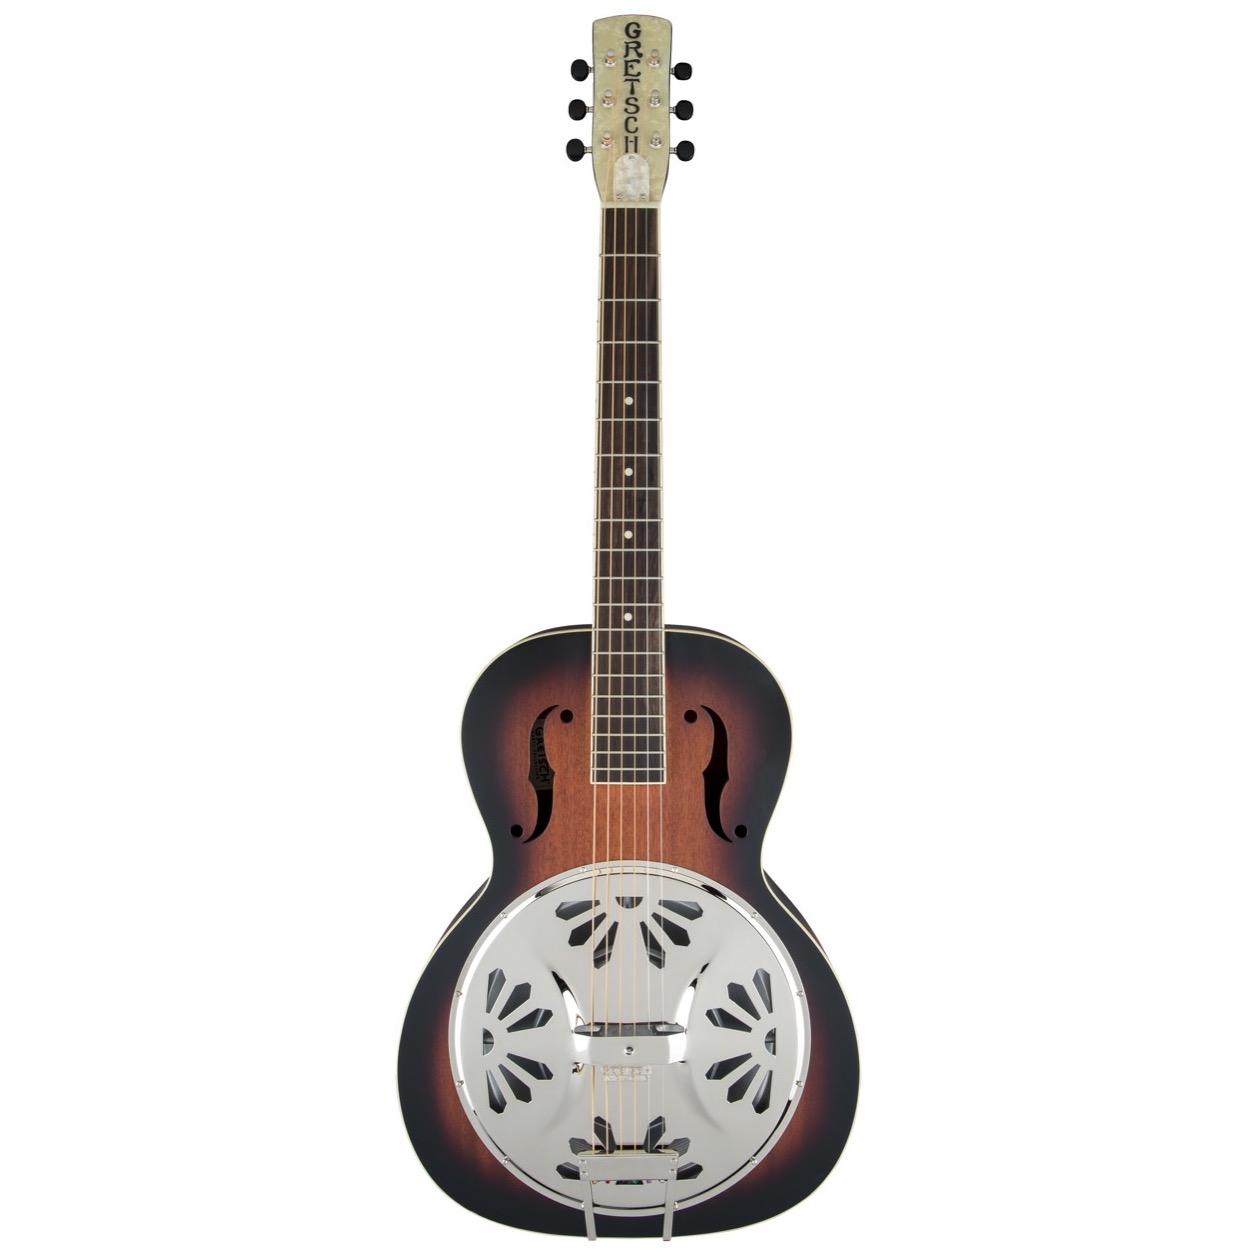 Gretsch G 9220 / G9220 Bobtail Round-Neck A.E., Mahogany Body Spider Cone Resonator Guitar, Fishman® Nashville Resonator Pickup, 2-Color Sunburst